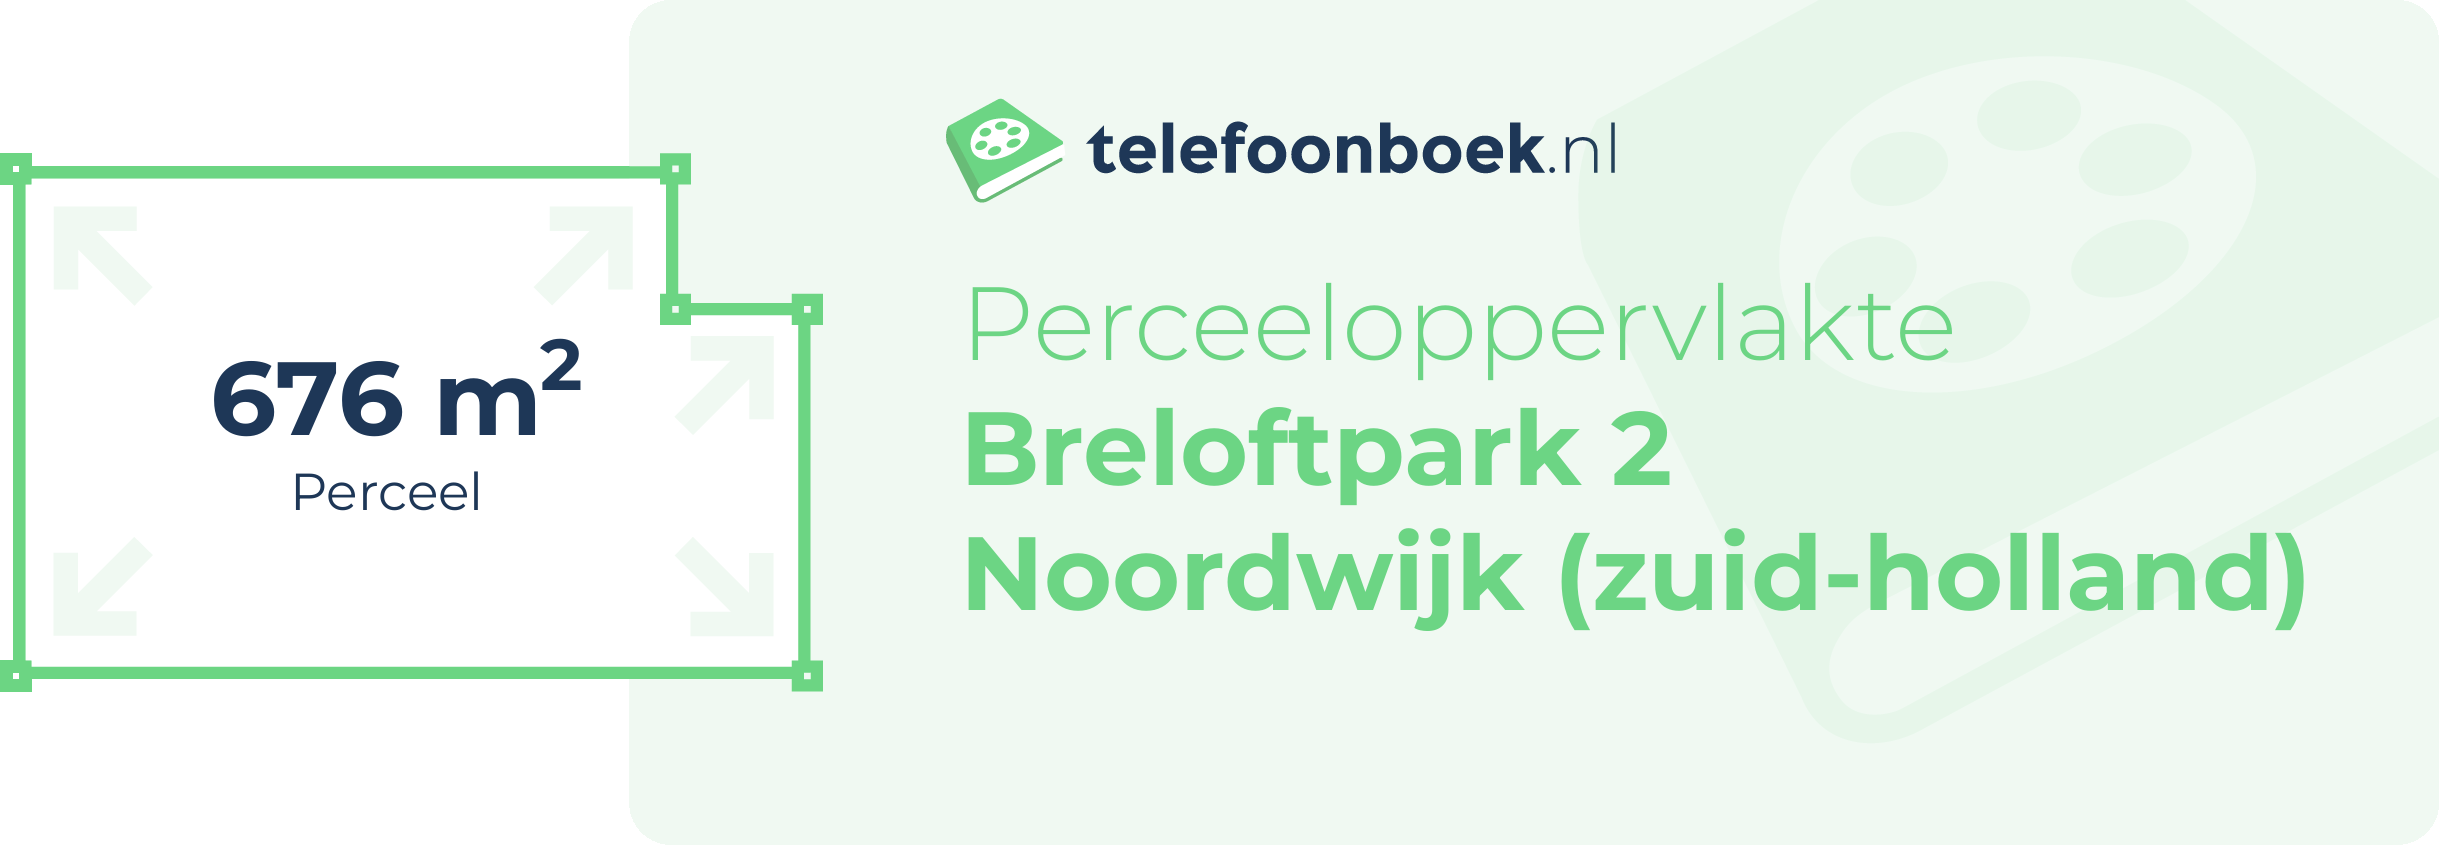 Perceeloppervlakte Breloftpark 2 Noordwijk (Zuid-Holland)